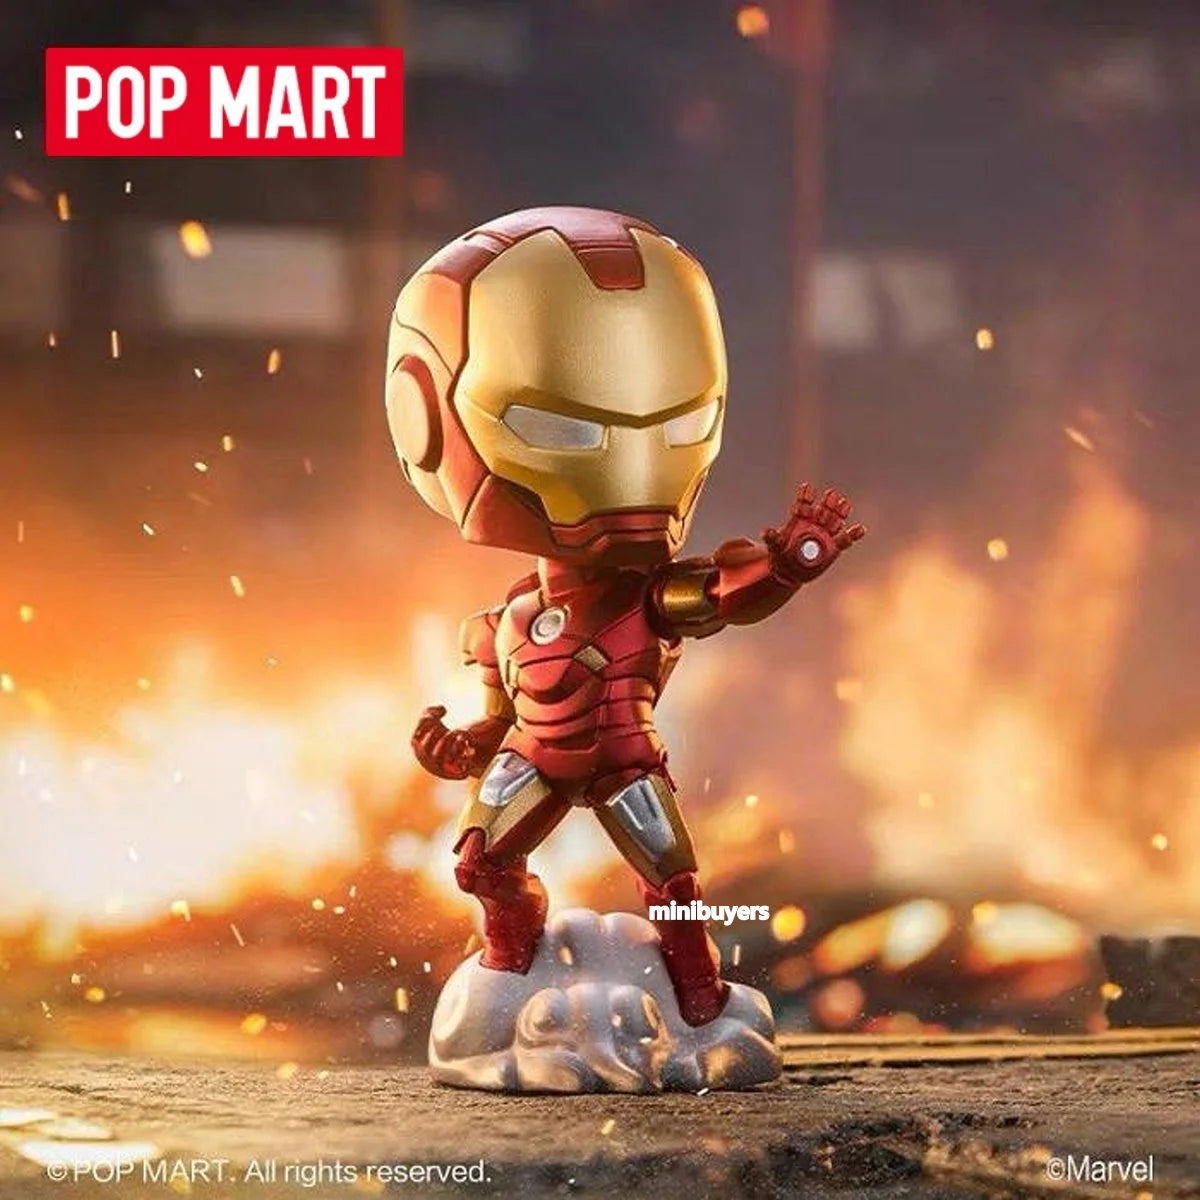 Funko Pop! Marvel - Iron Man ( Exclusive) – The Seeker